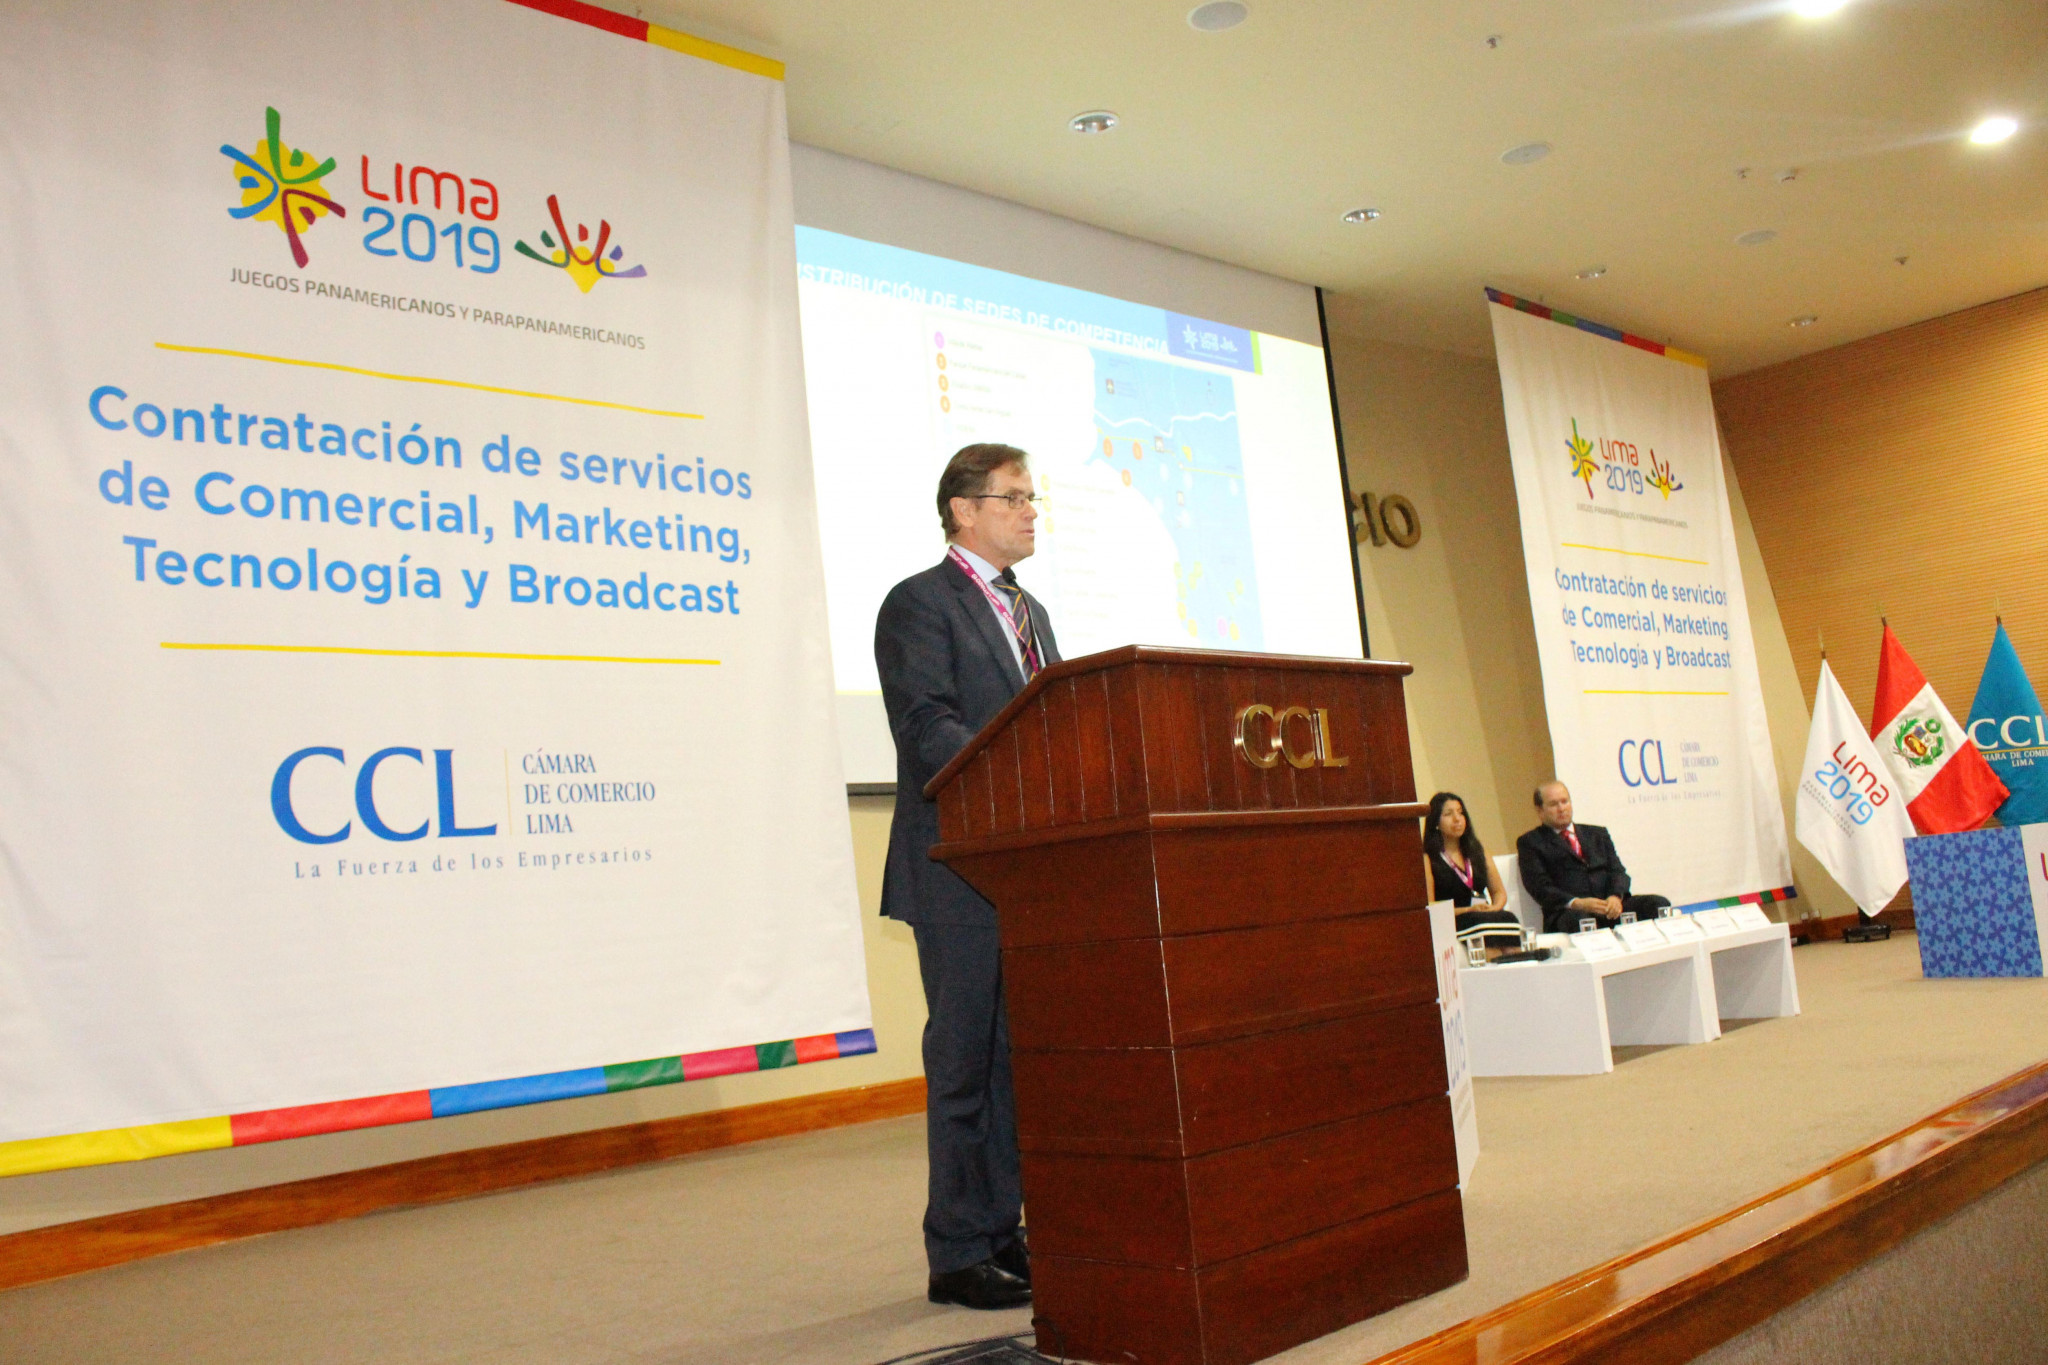 More than 500 companies attend Lima 2019 procurement seminar